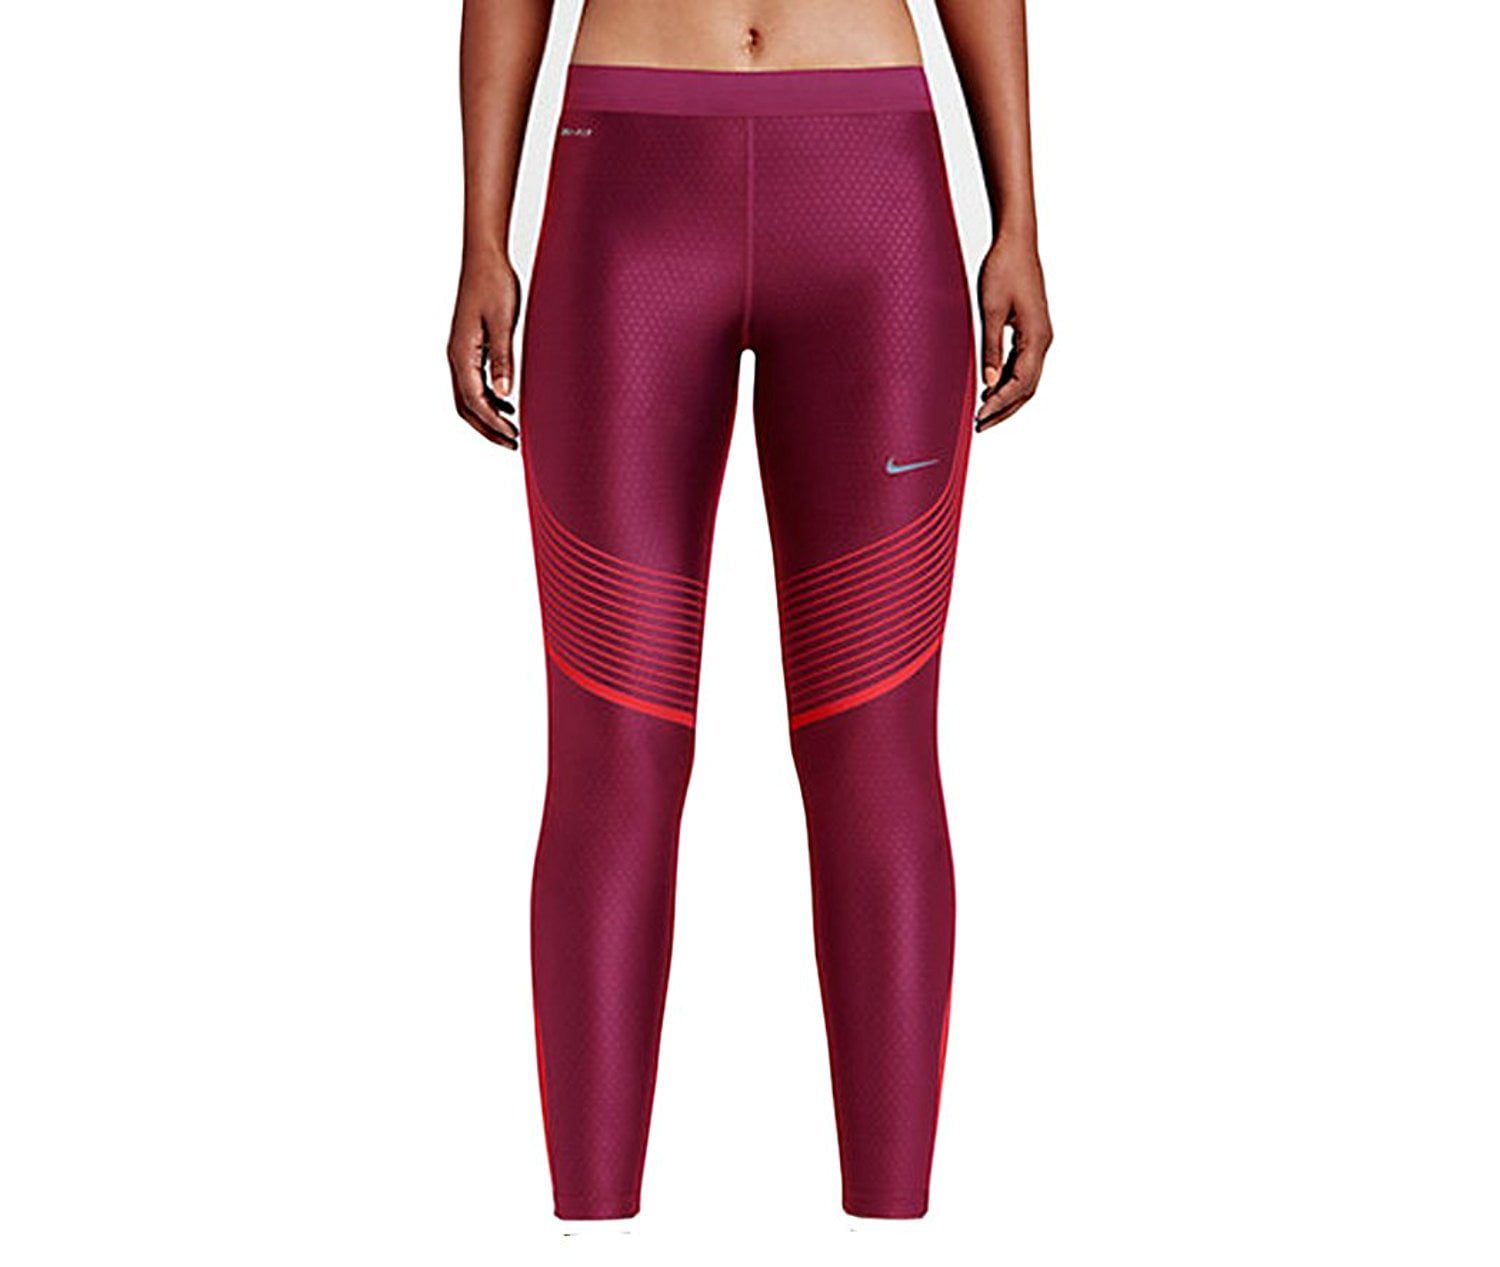 Nike Power Women's Running Athletic Pants - Walmart.com